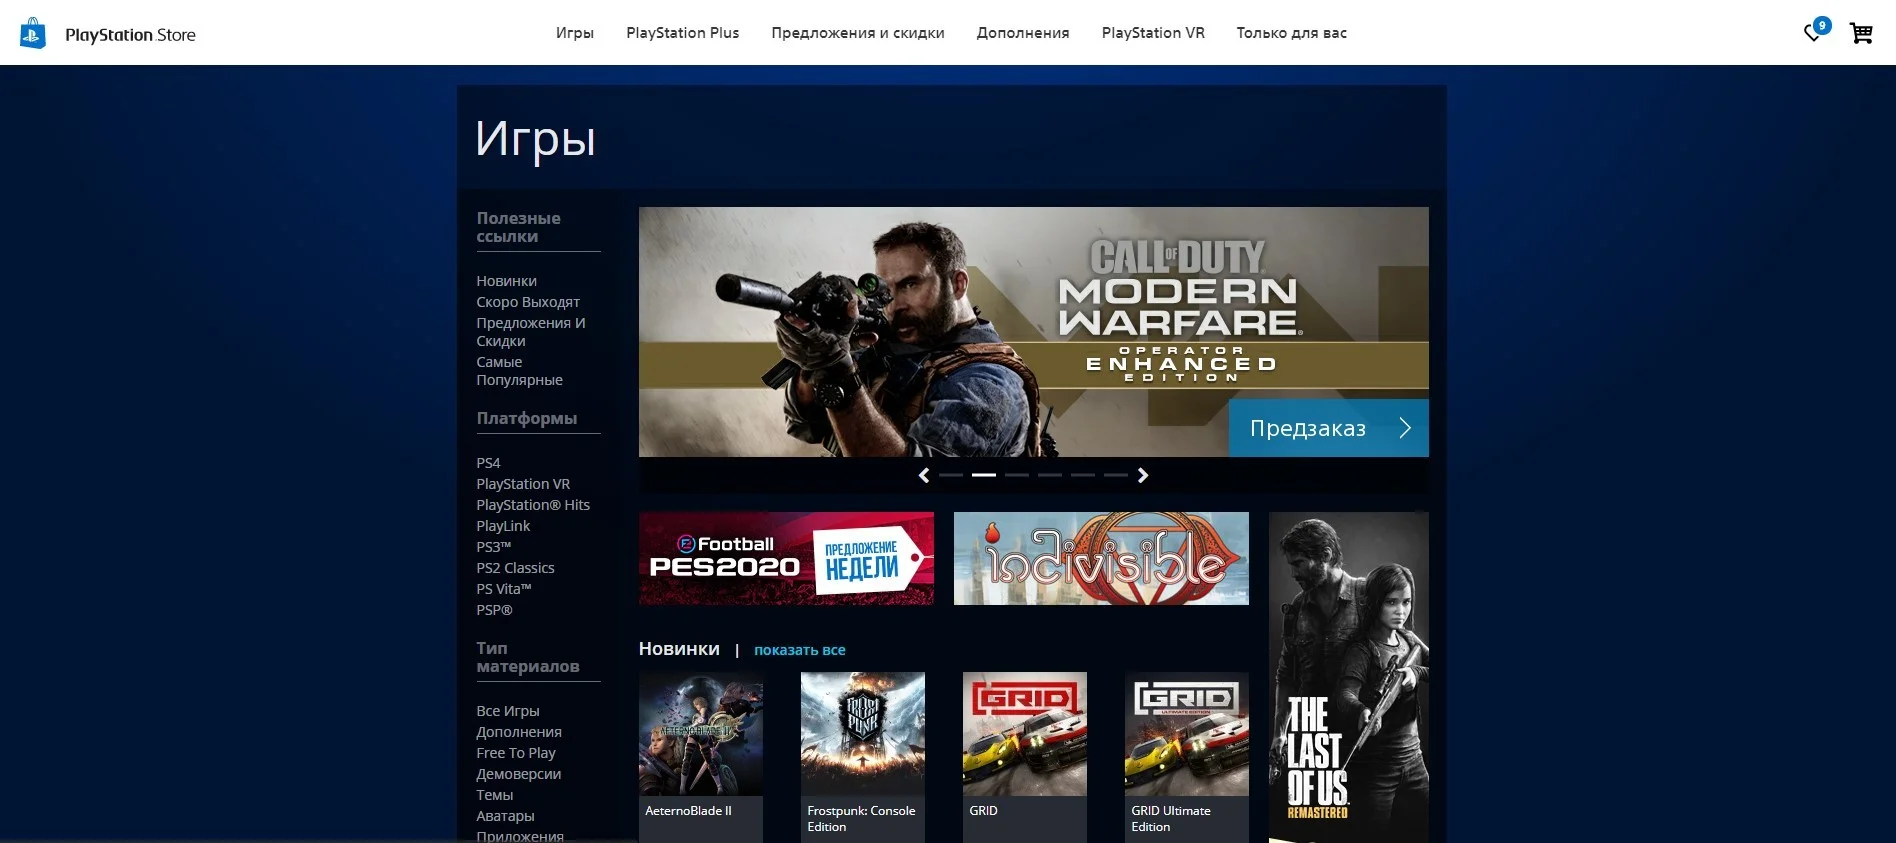 В российском PS Store появилась реклама предзаказа Call of Duty: Modern Warfare - фото 1